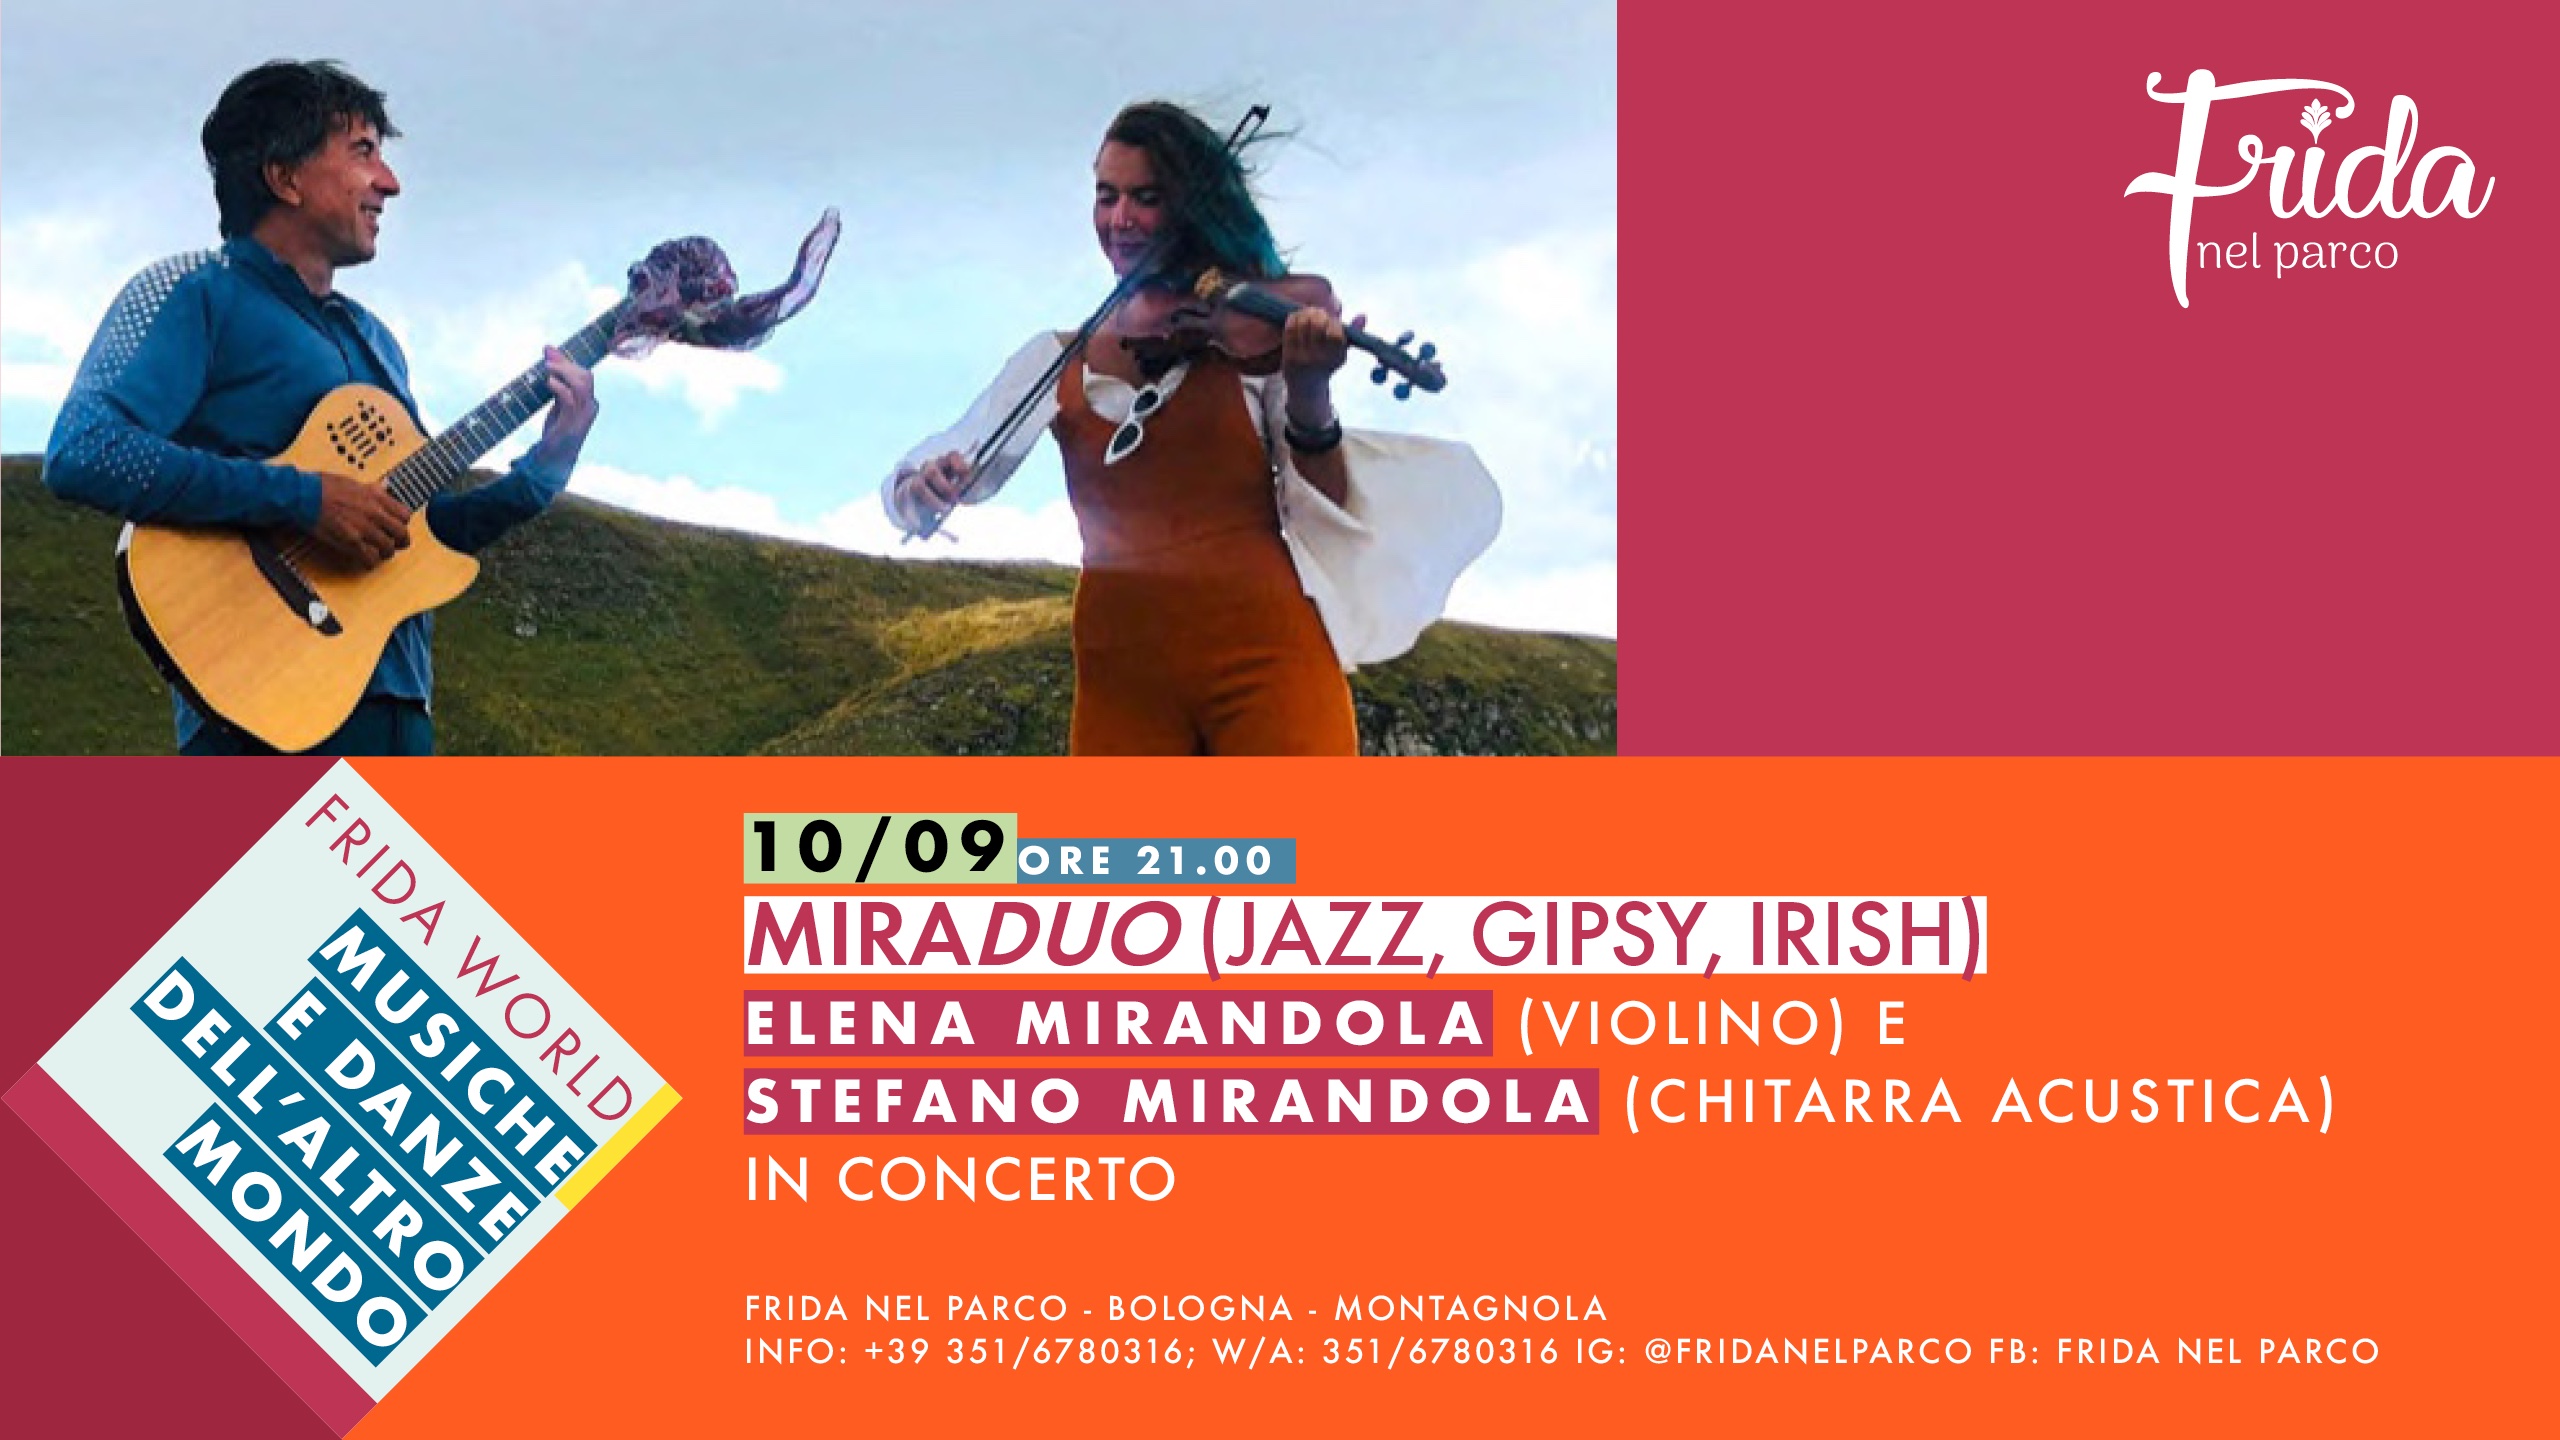 MIRAduo (jazz, gipsy, irish), Elena Mirandola (violino) e Stefano Mirandola (chitarra acustica) in concerto